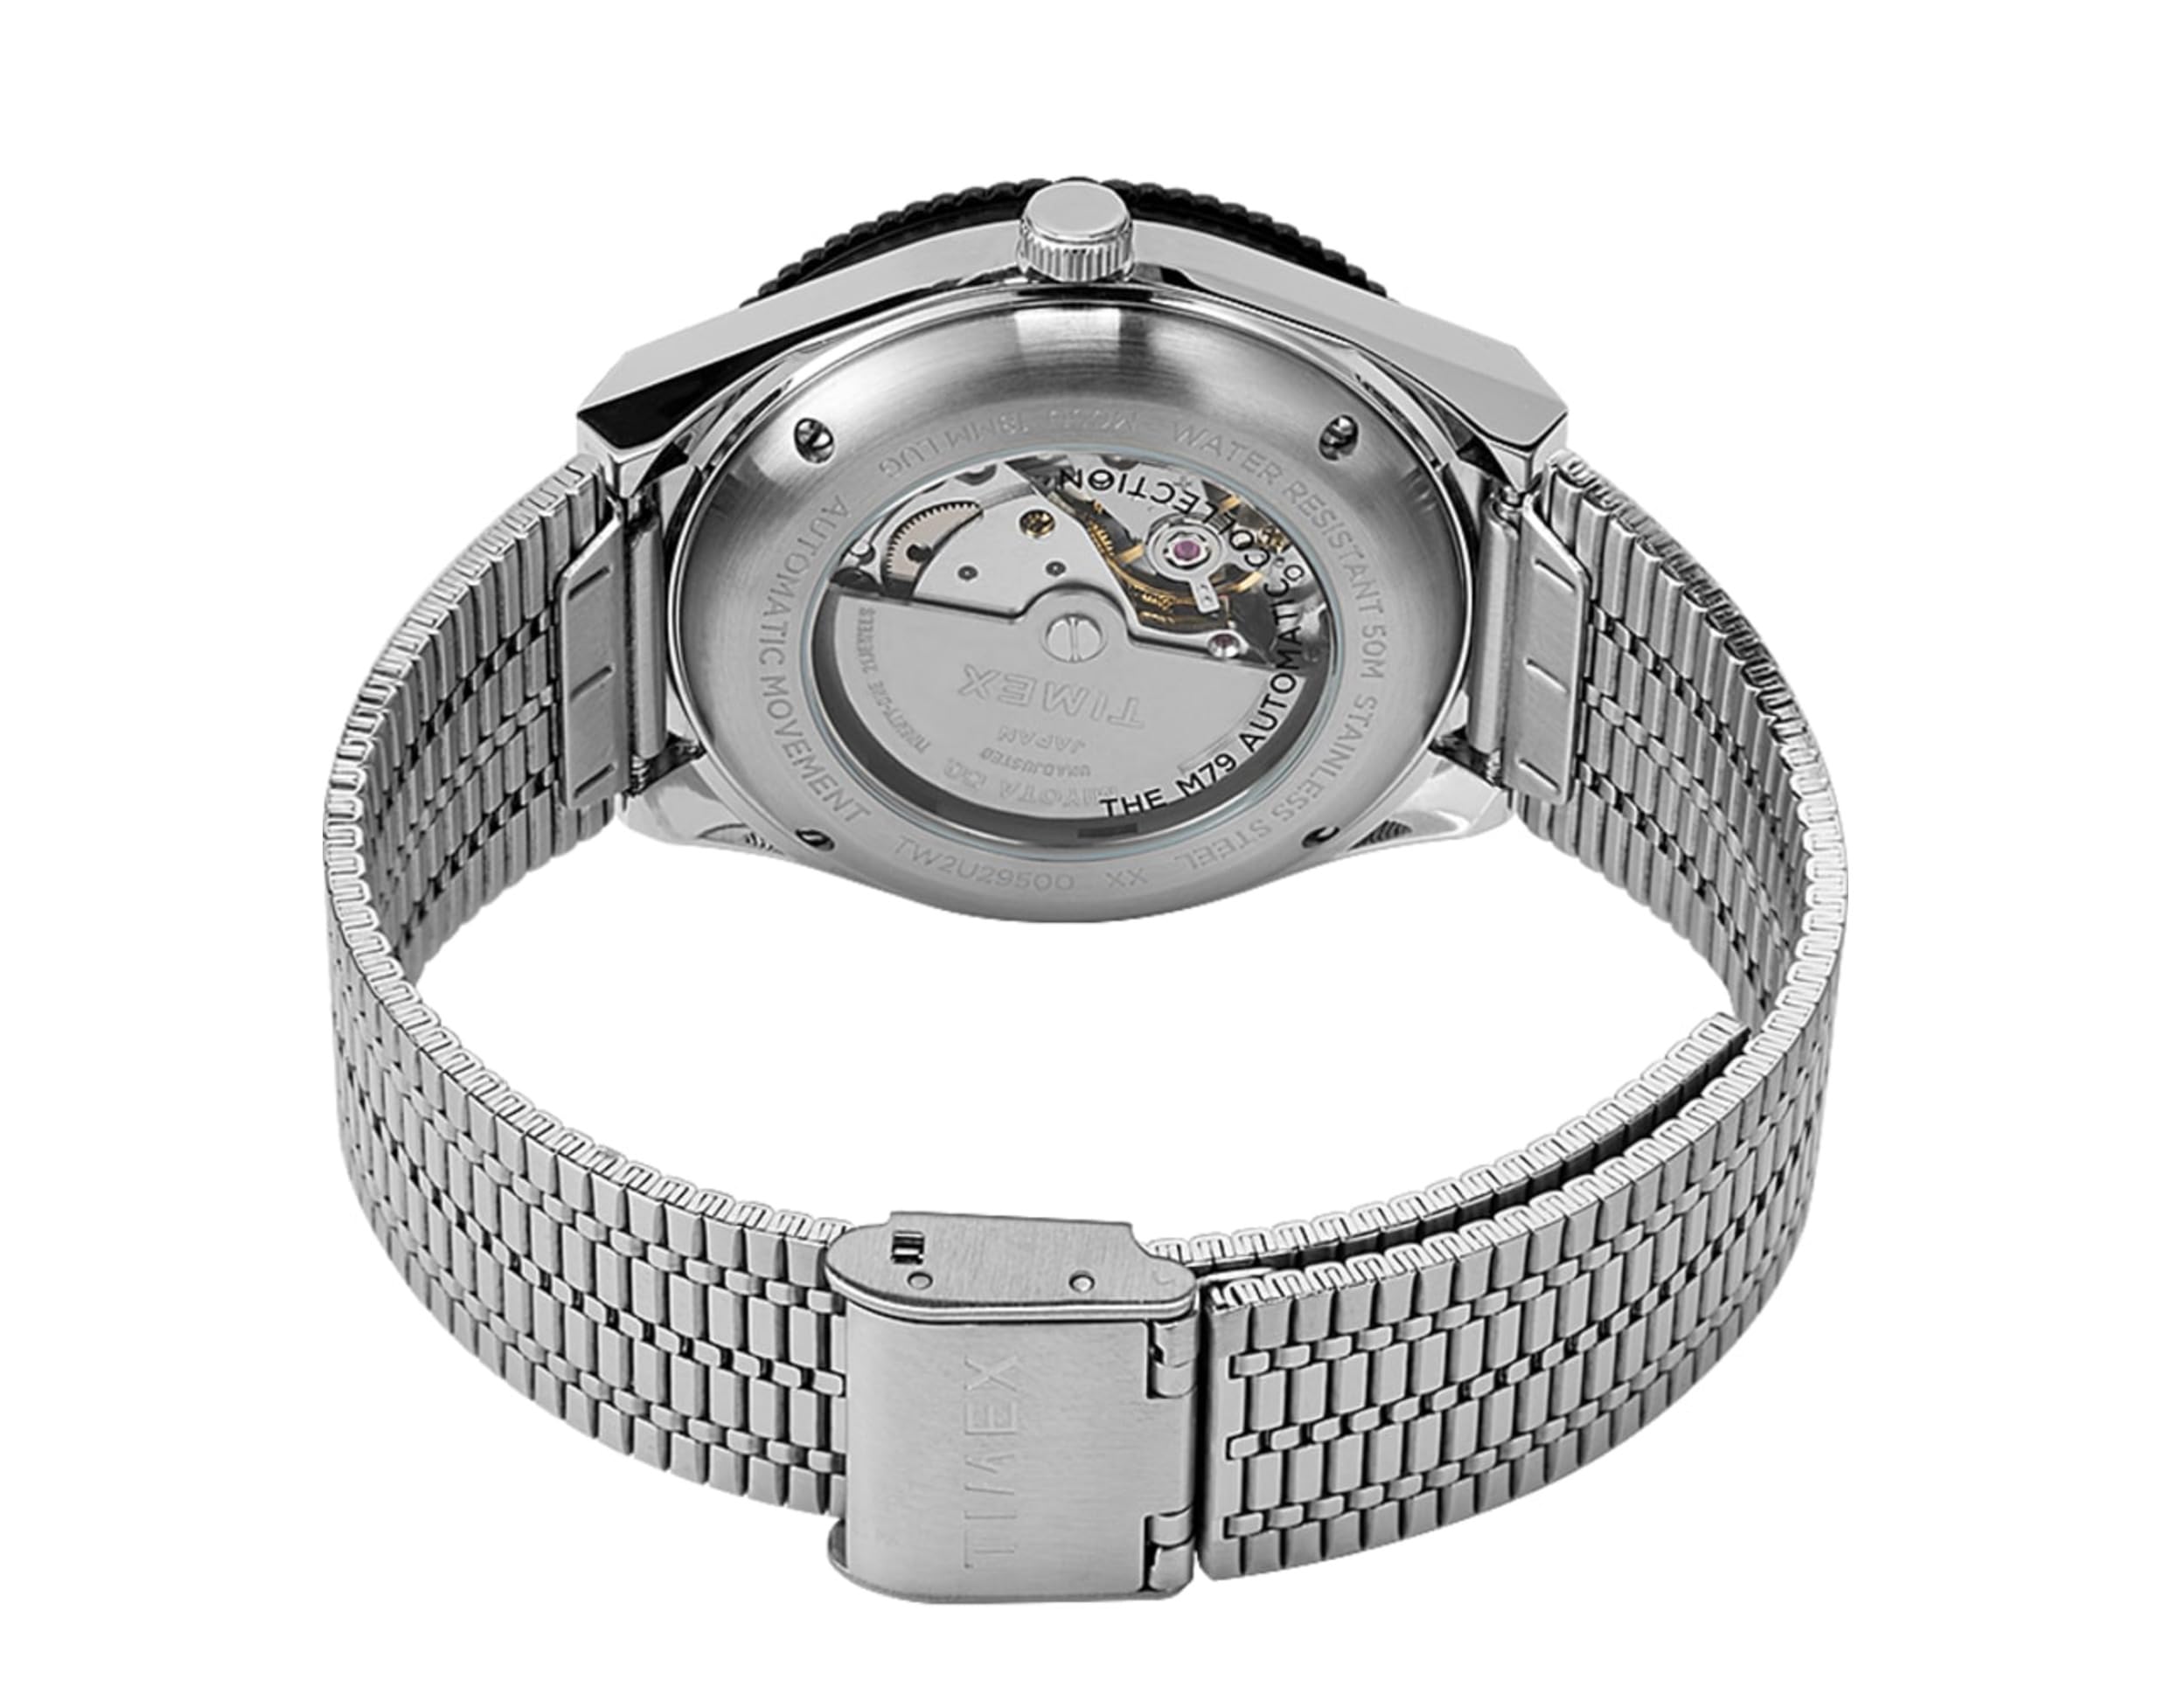 Timex M79 Automatic Bracelet